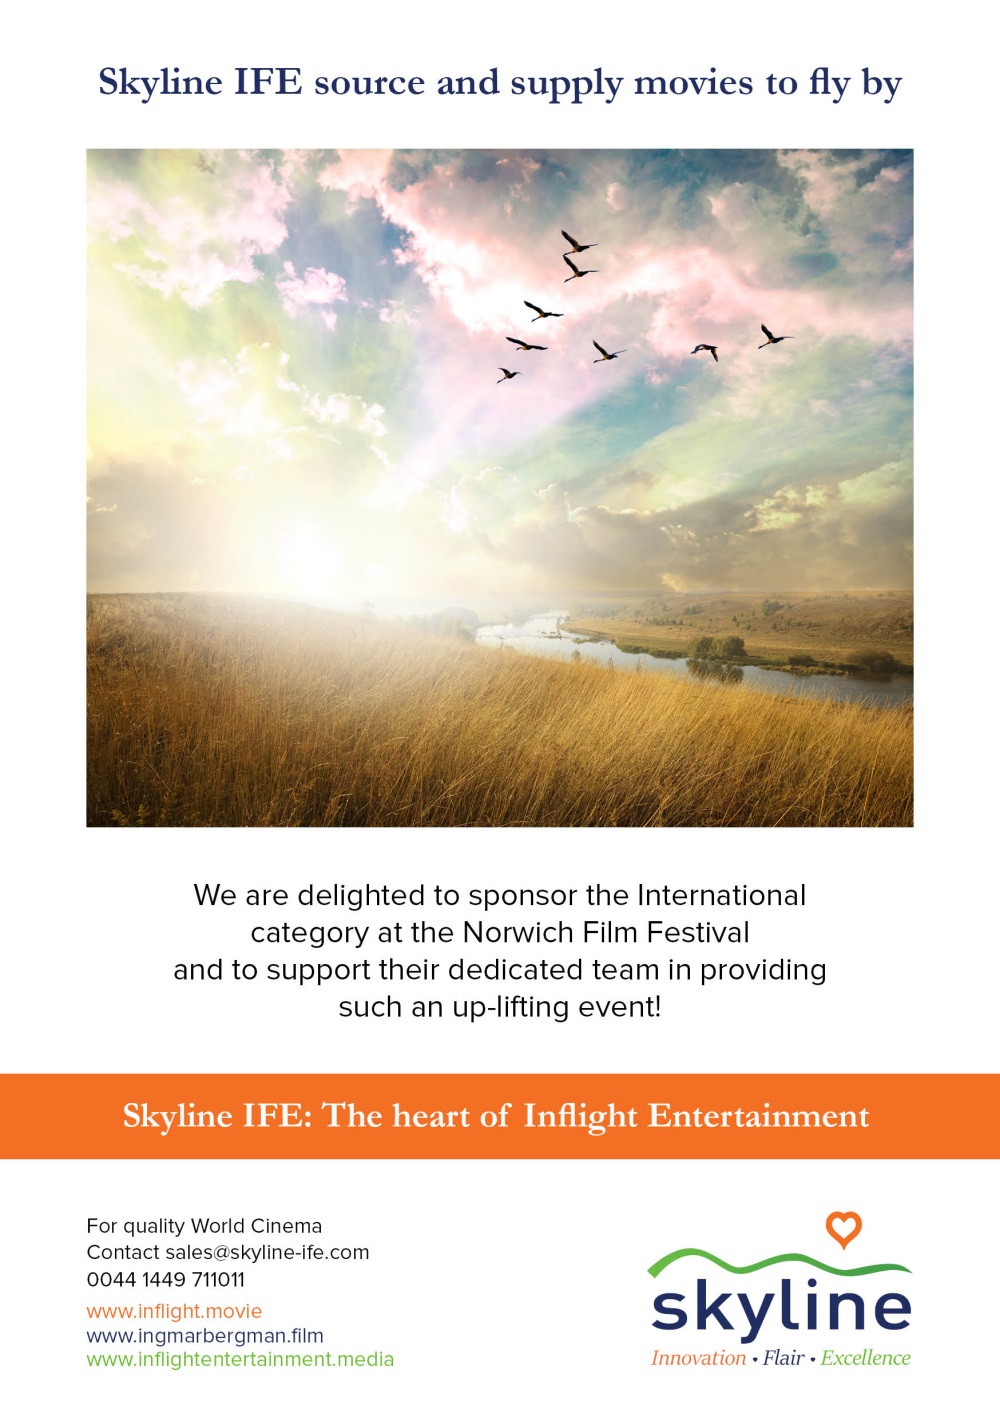 Skyline IFE sponsors Norwich Film Festival